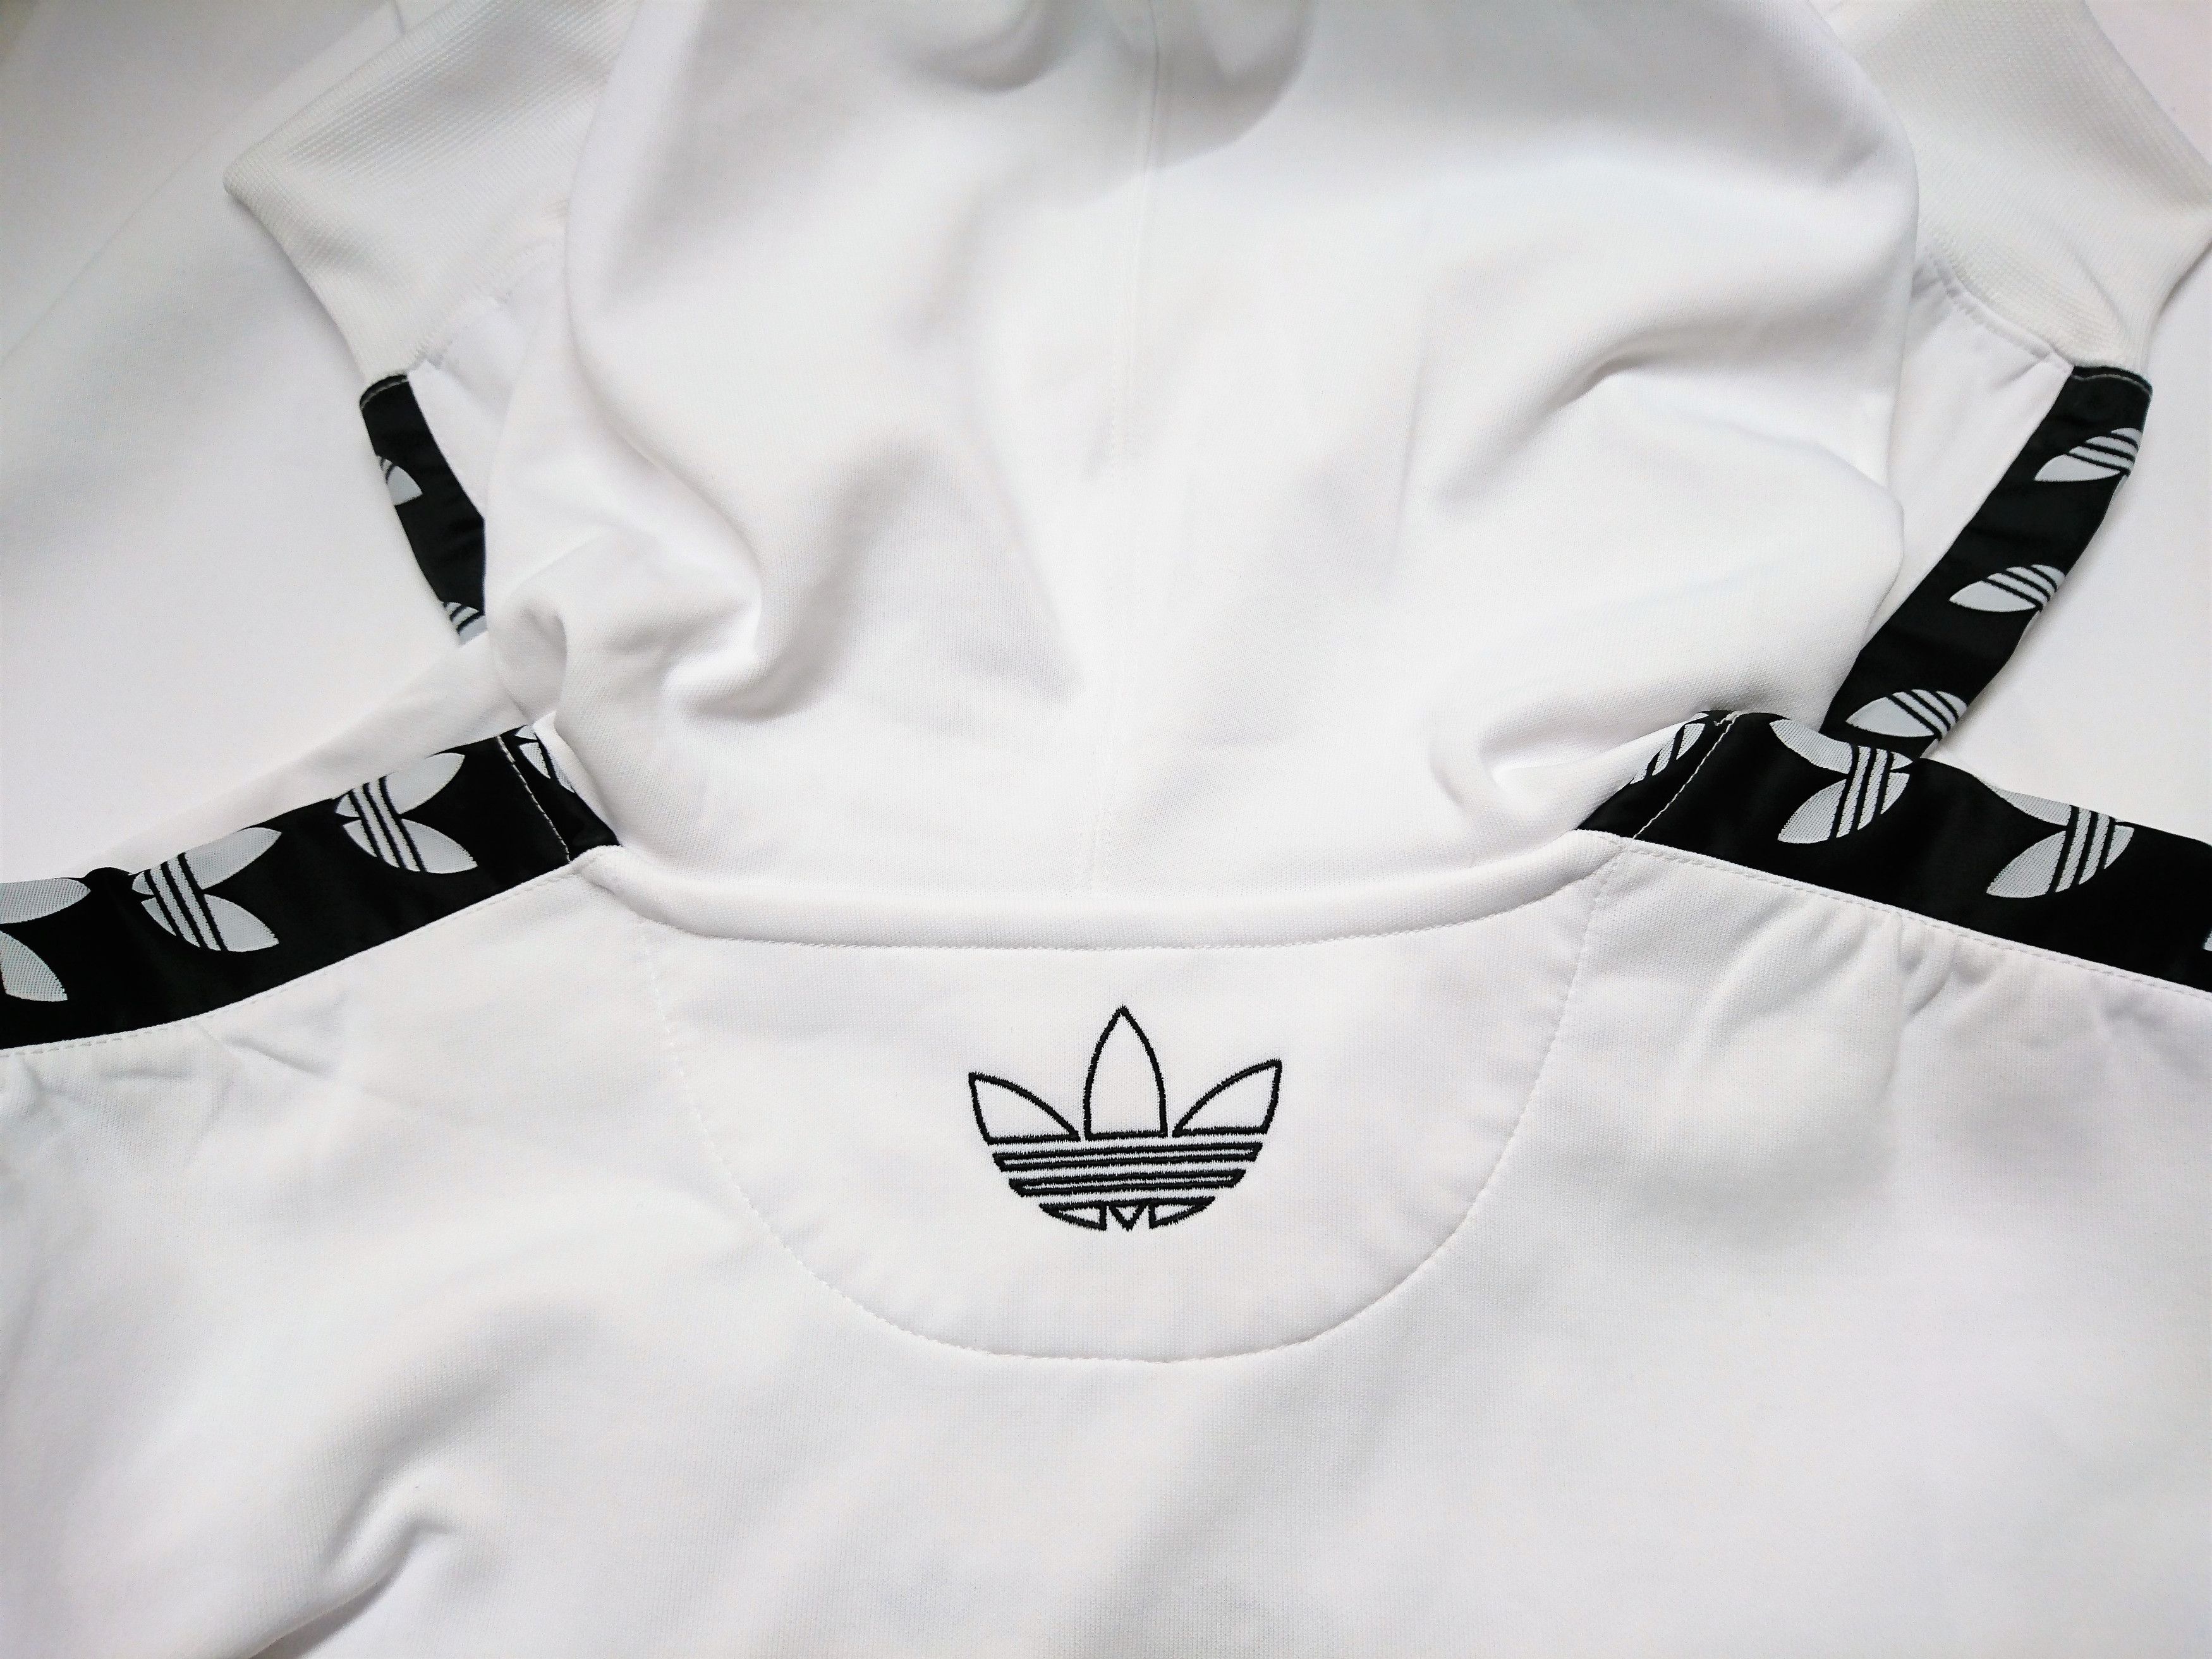 Adidas Adidas Originals TNT Tape pullover hoodie Size US M / EU 48-50 / 2 - 8 Thumbnail